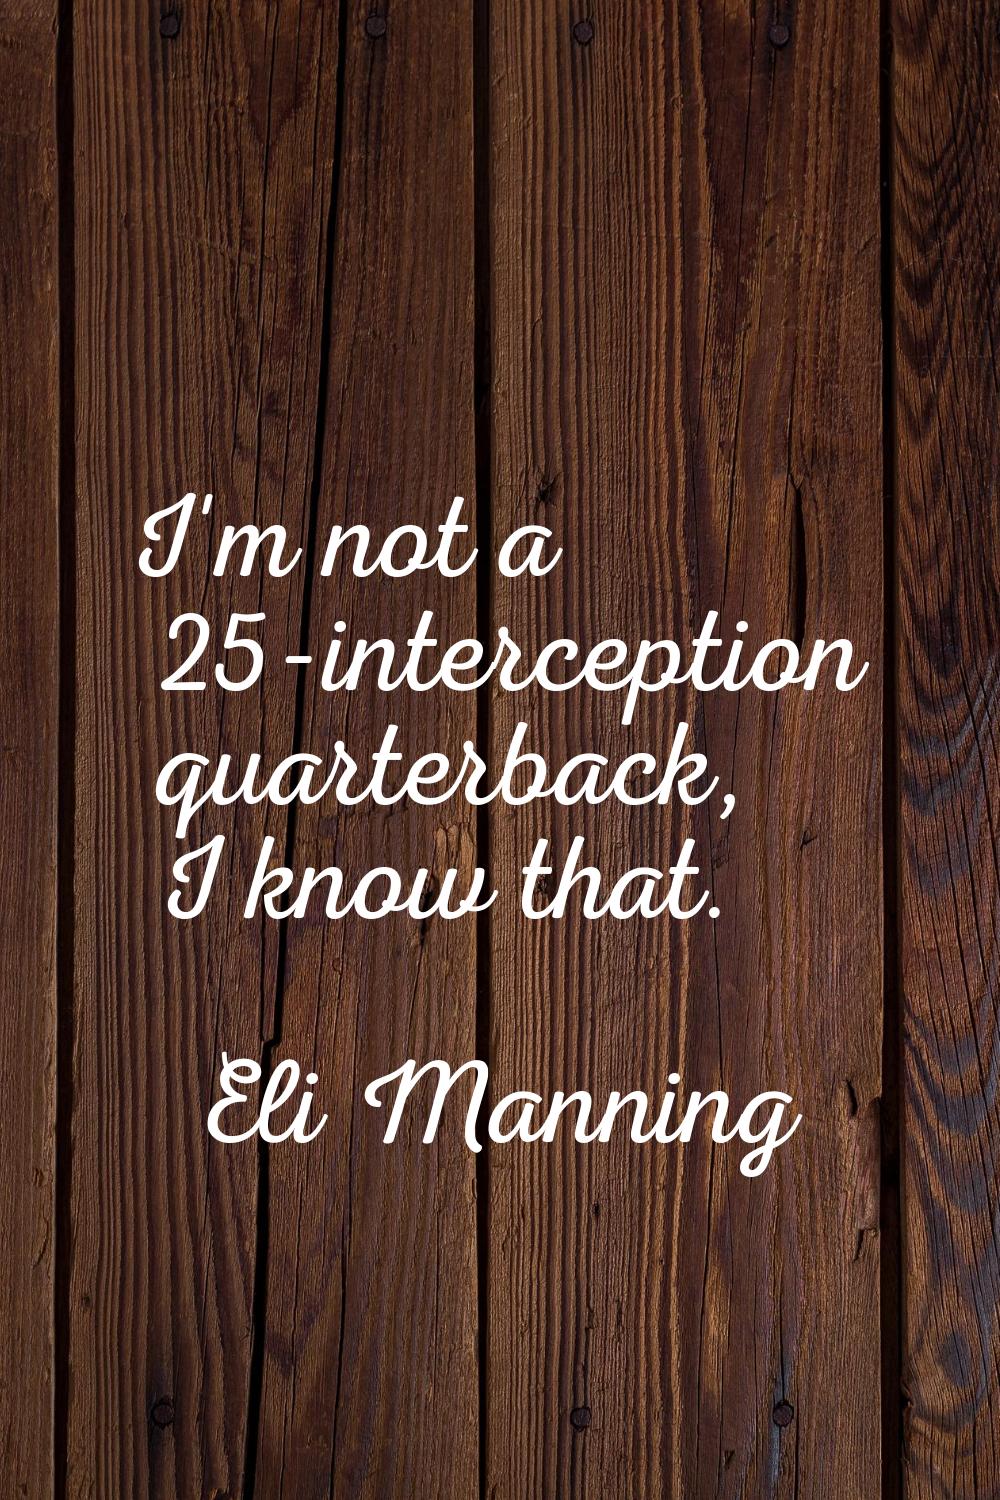 I'm not a 25-interception quarterback, I know that.